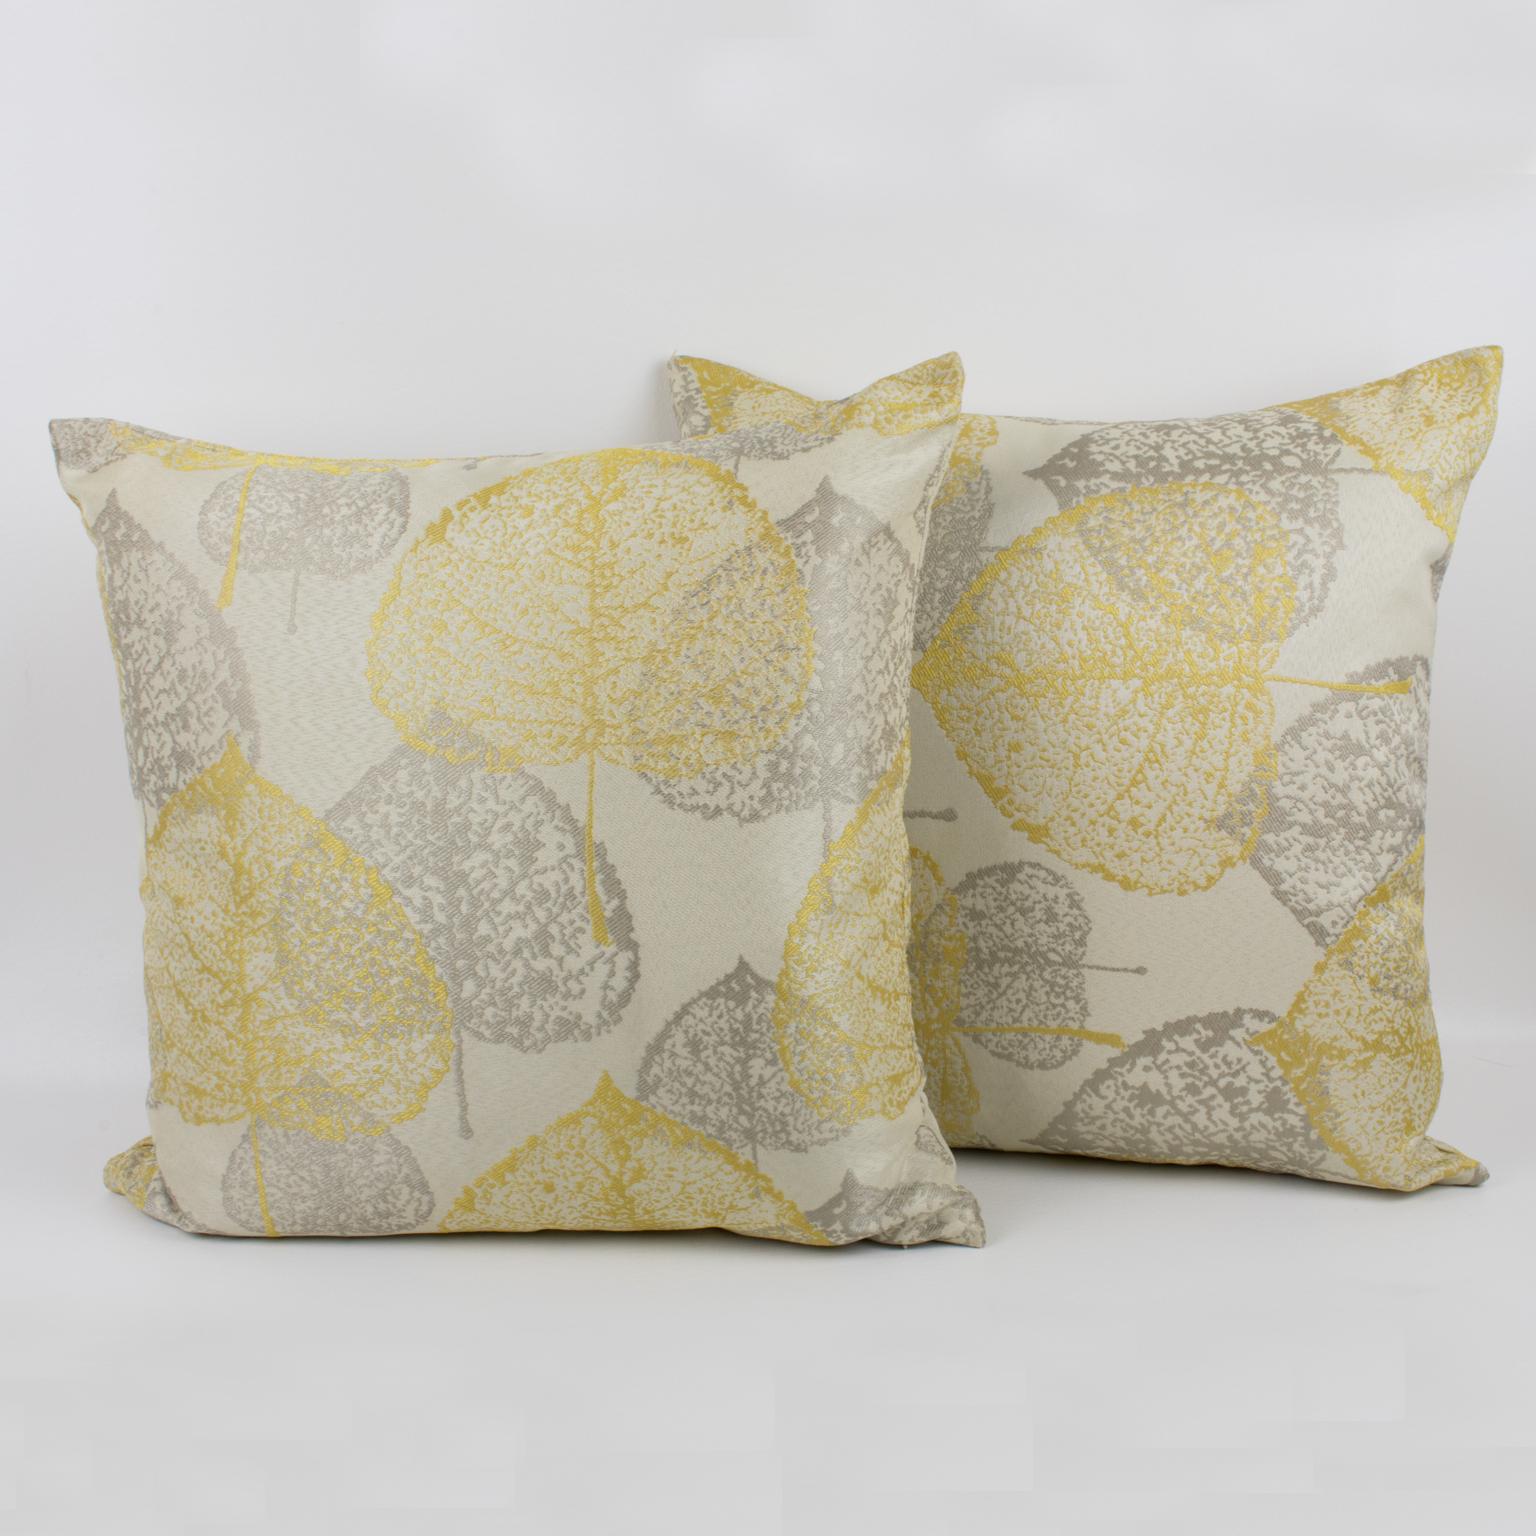 Modern Yellow Silver-Gray Damask Throw Pillow, a pair